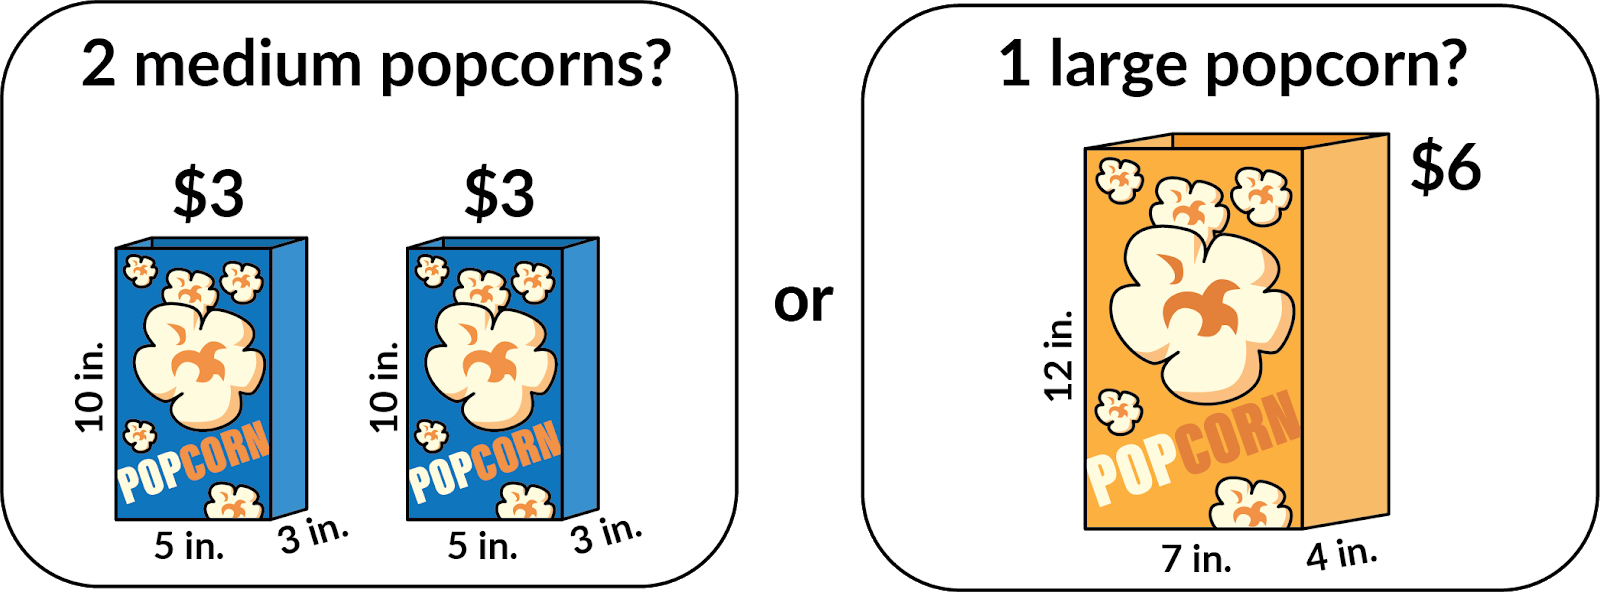 Illustration of 2 medium popcorn boxes compared to 1 large popcorn box.